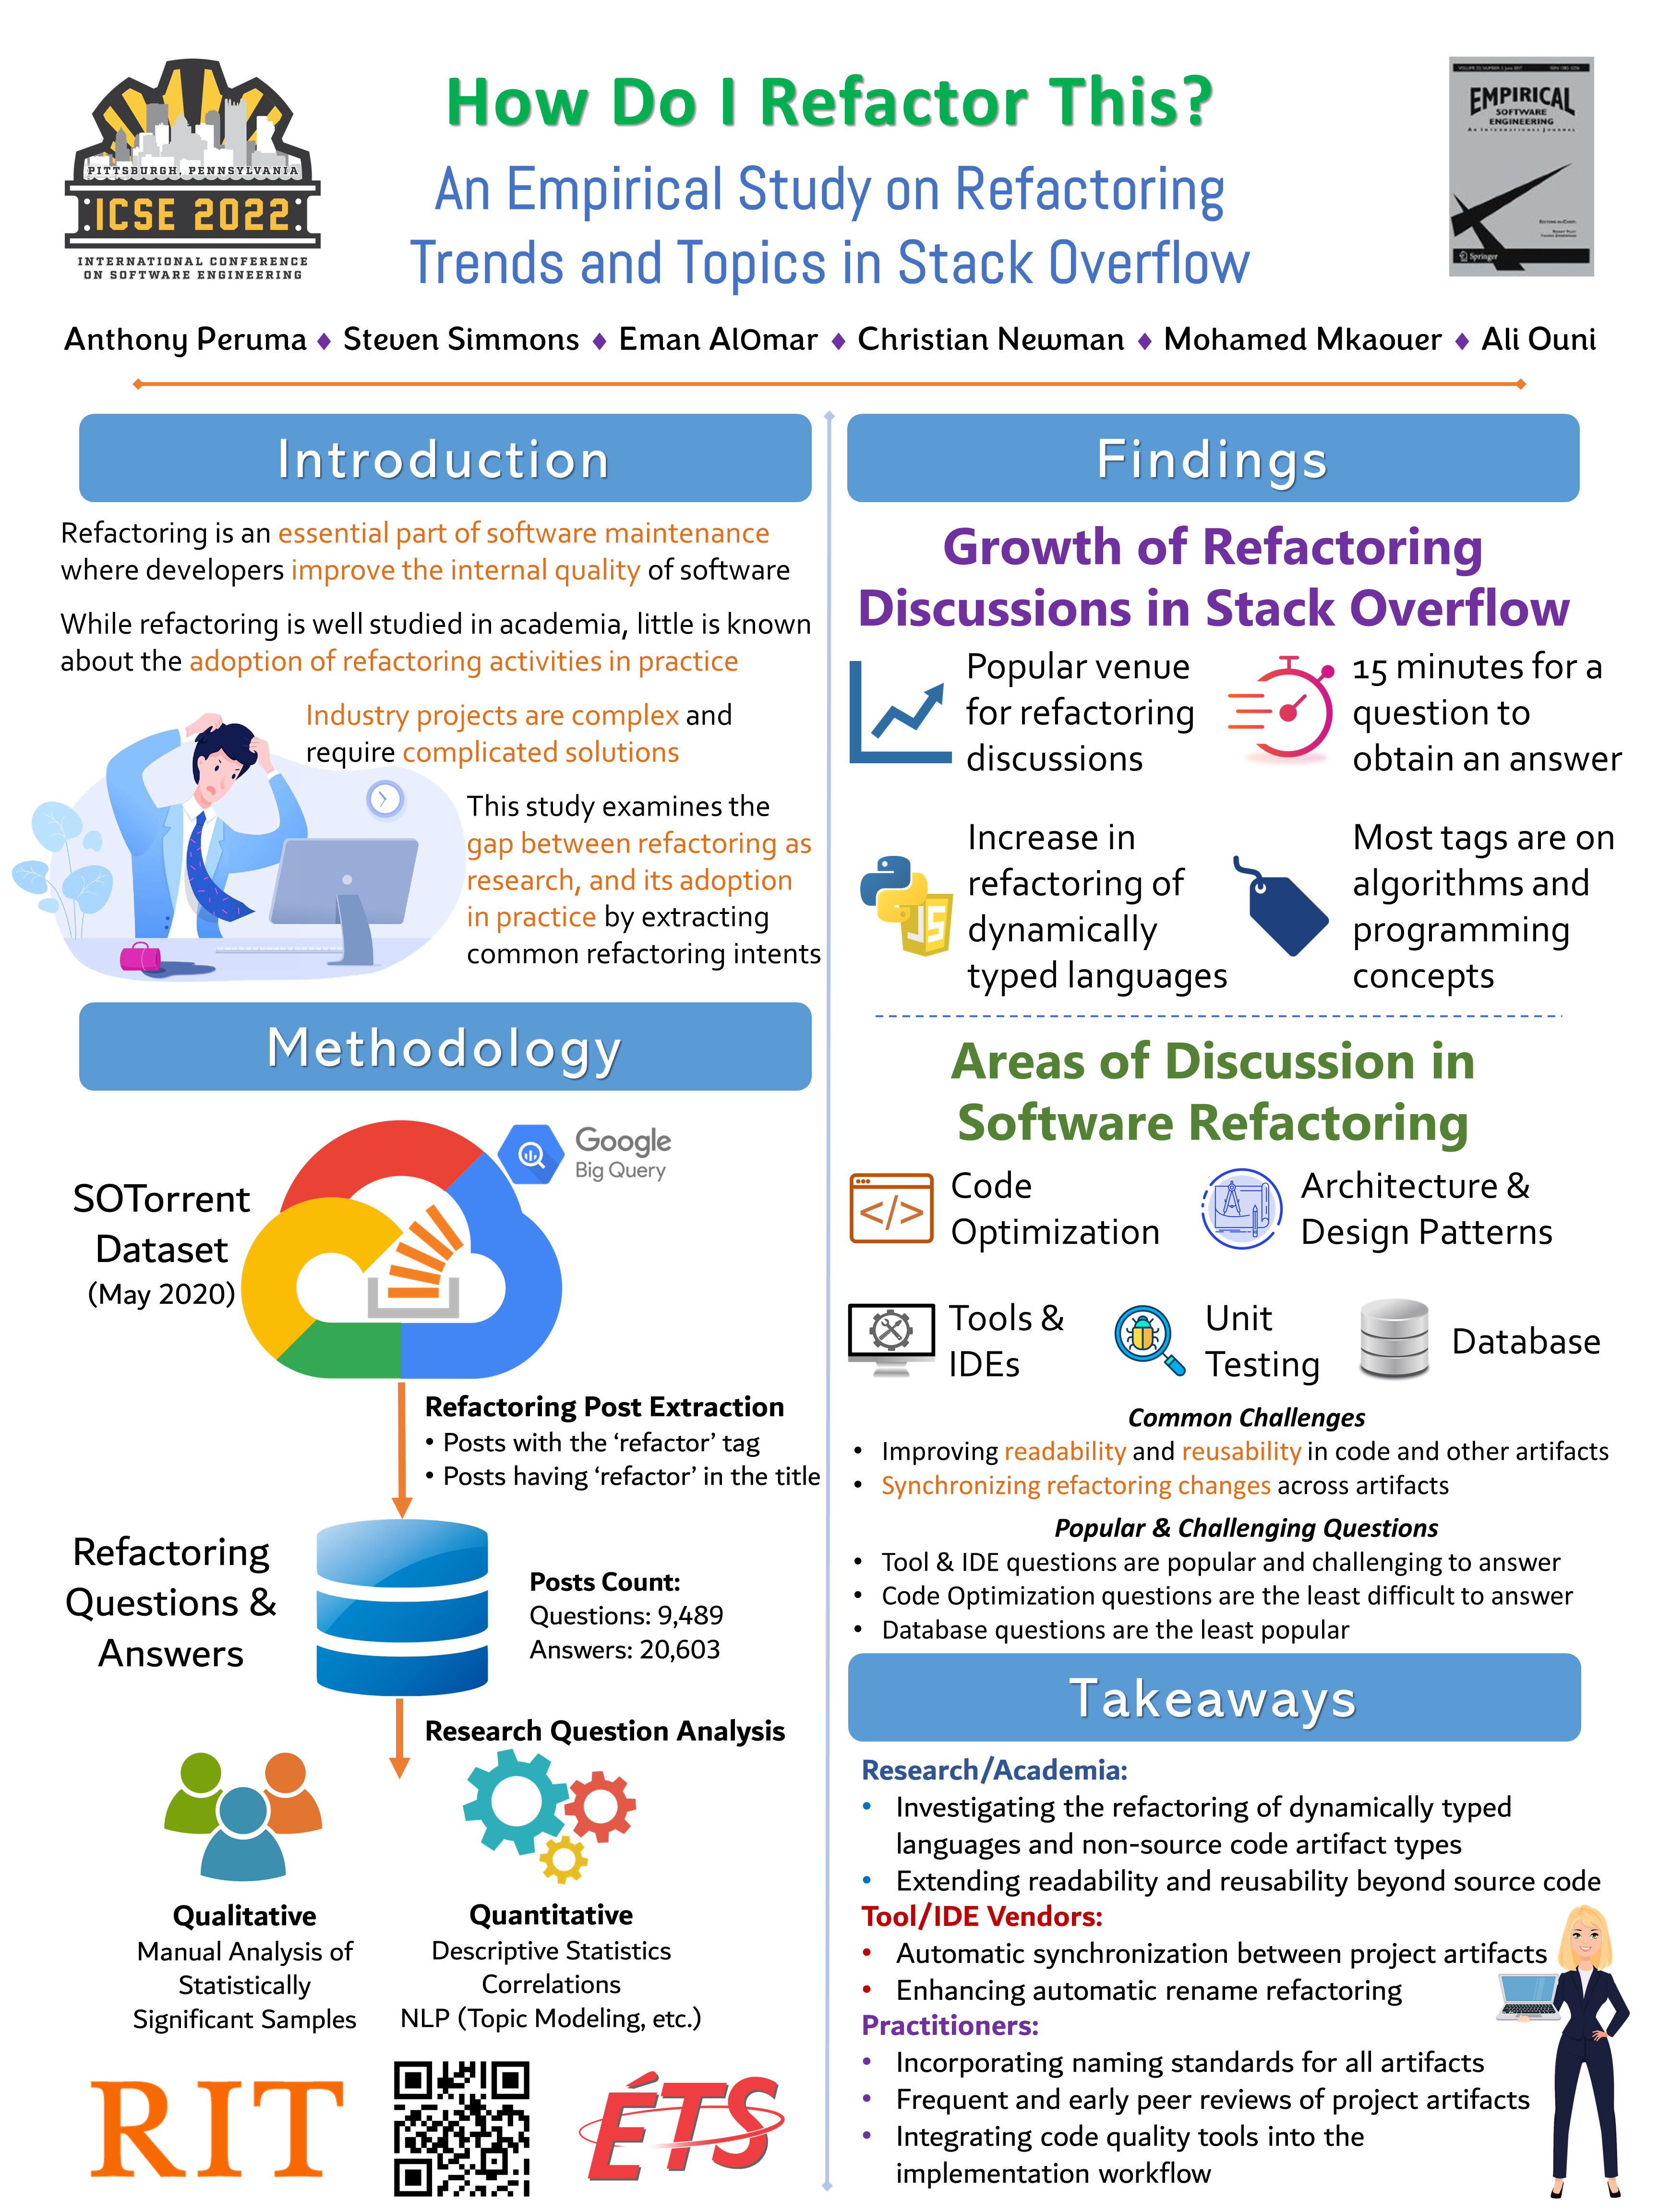 ICSE Poster - StackOverflow Refactoring